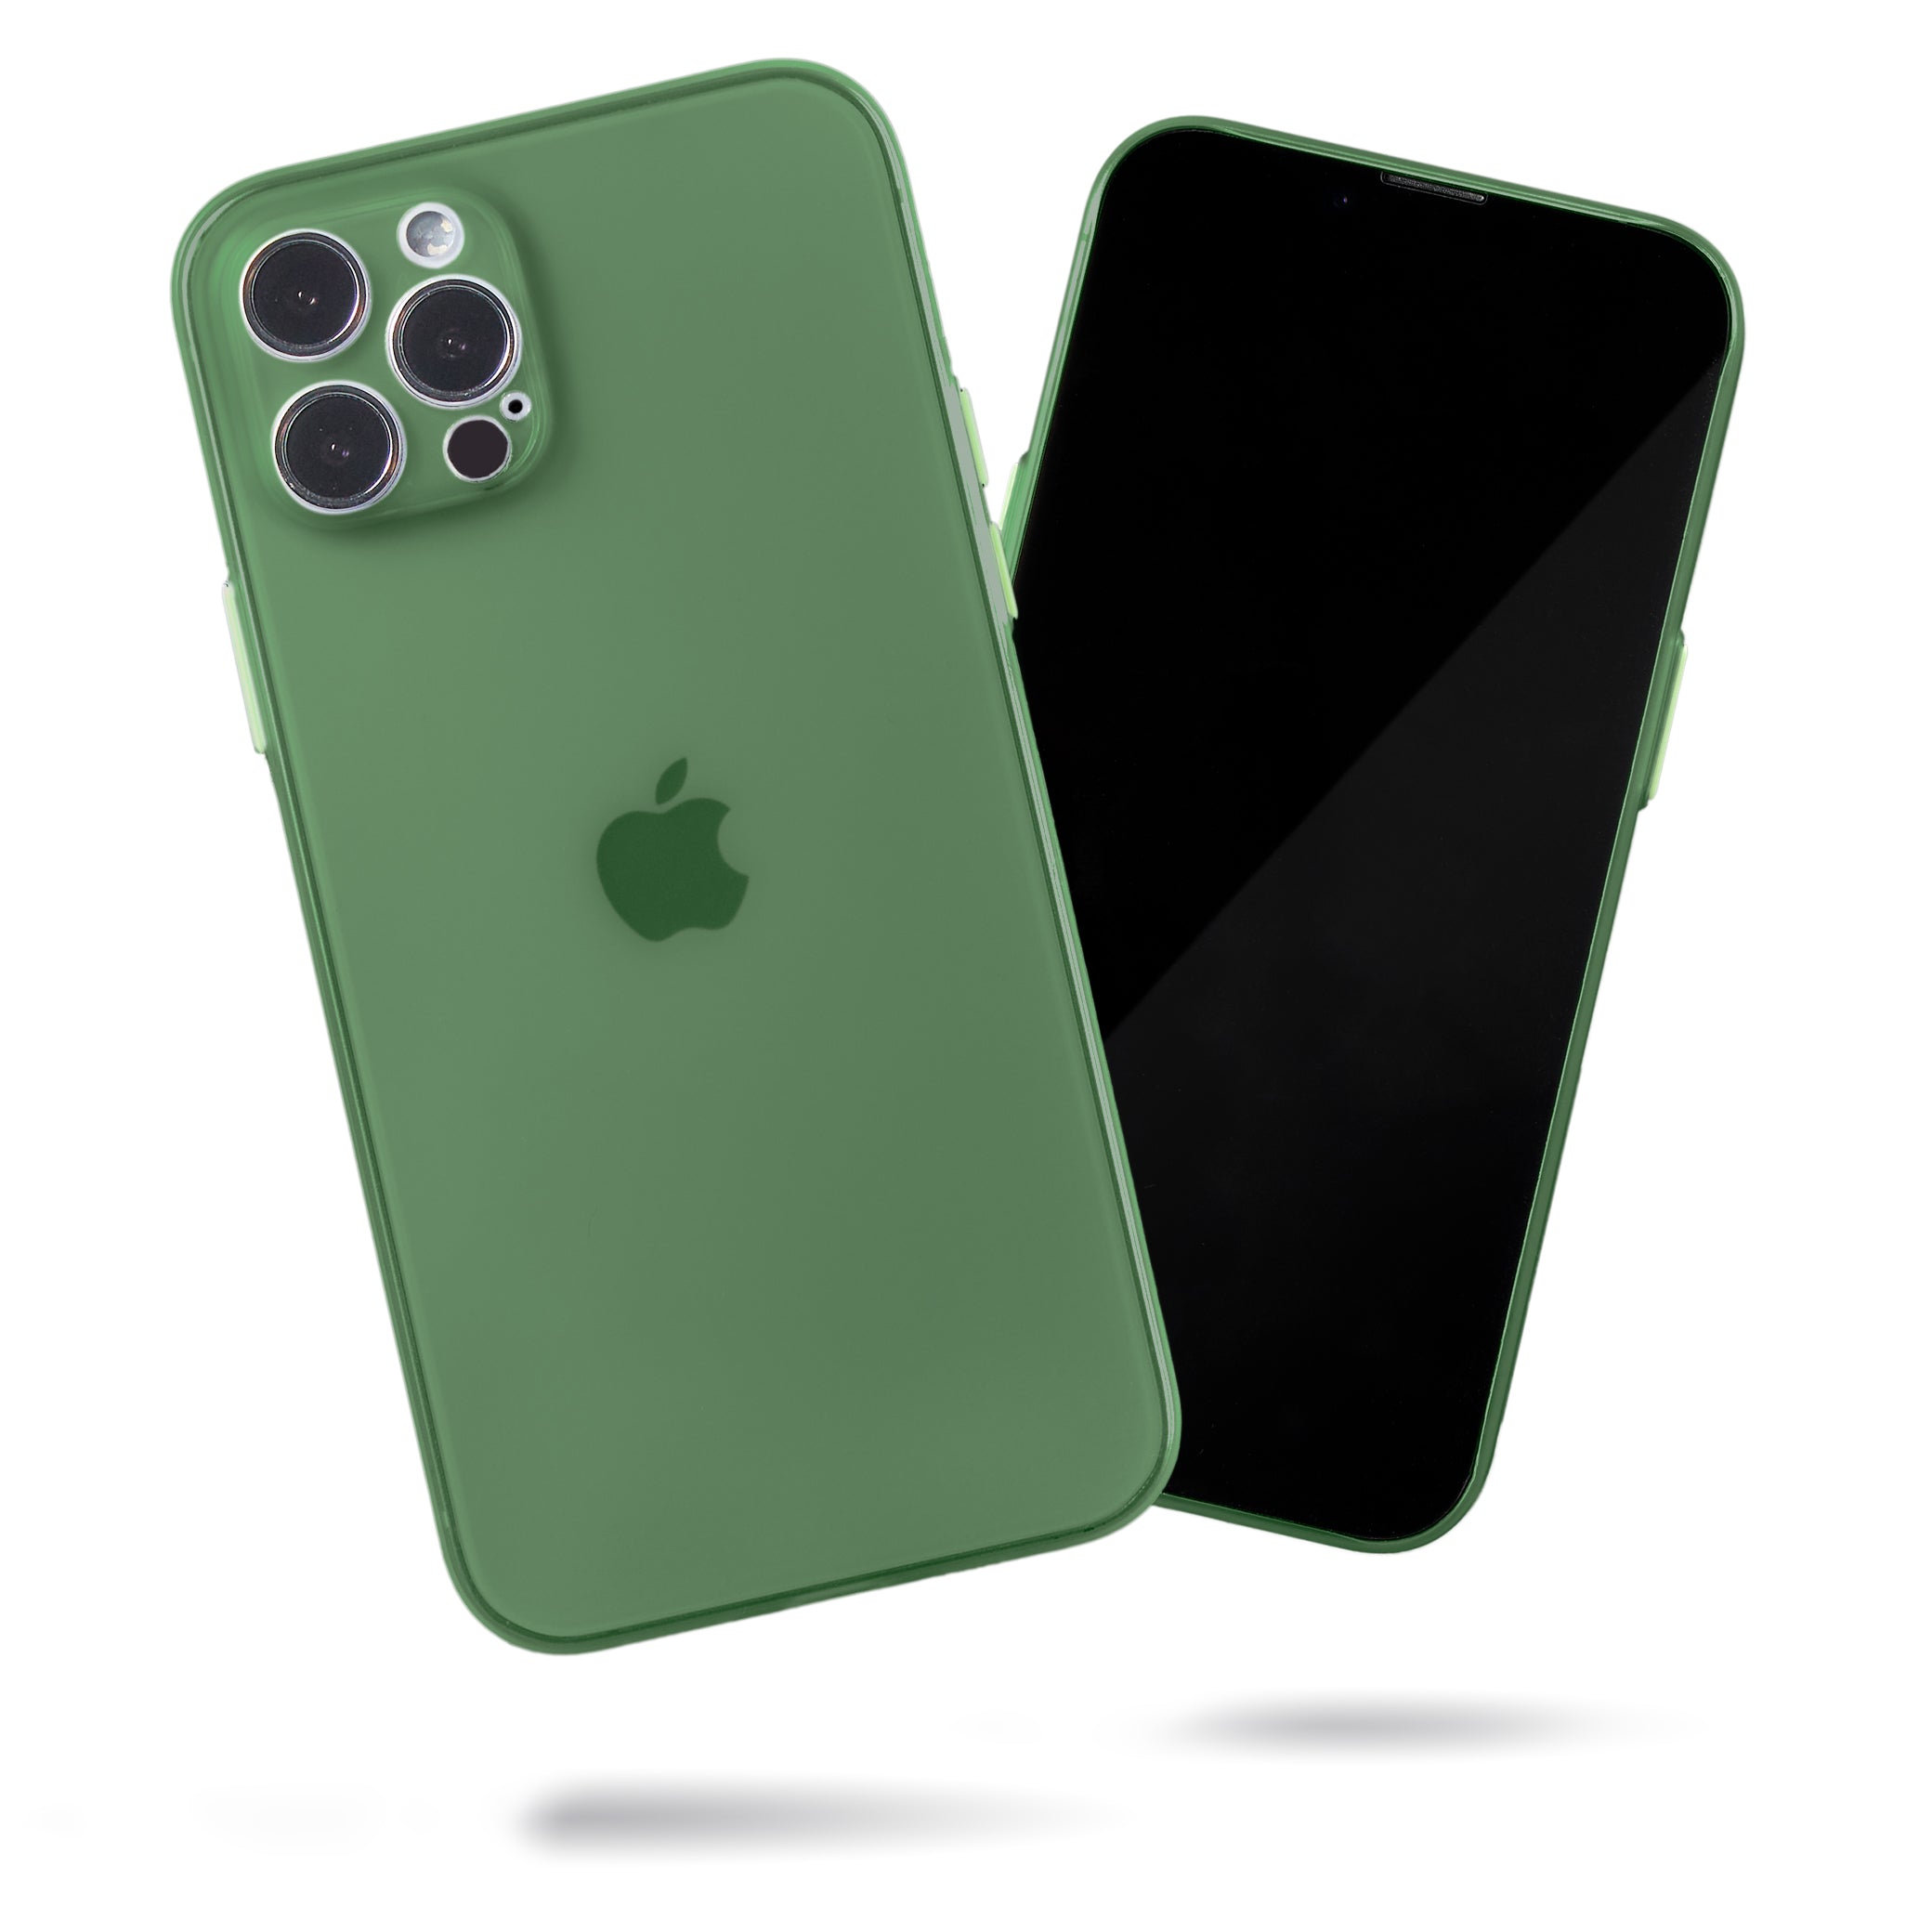 Super Slim Case 2.0 for iPhone 12 Pro - Avacado Green